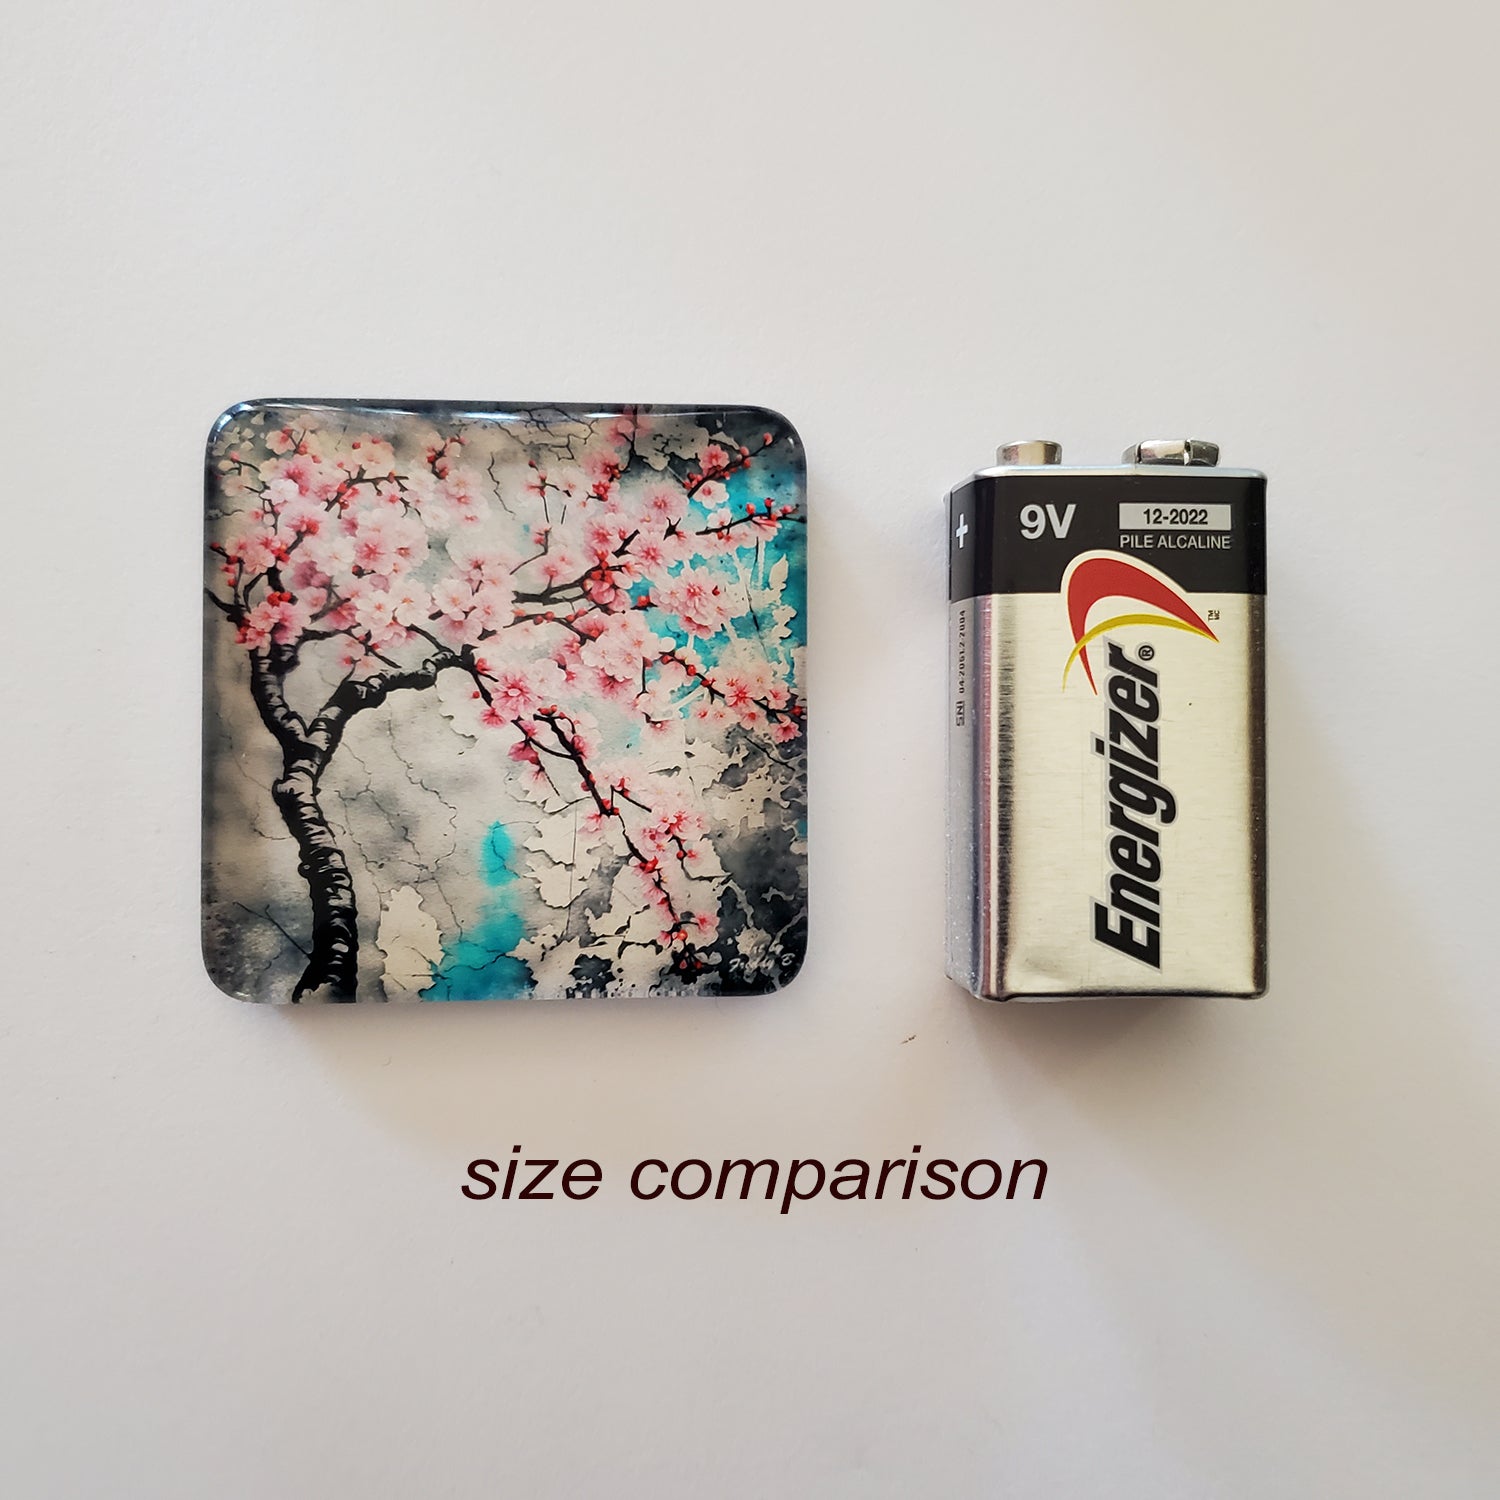 size comparison for magnets